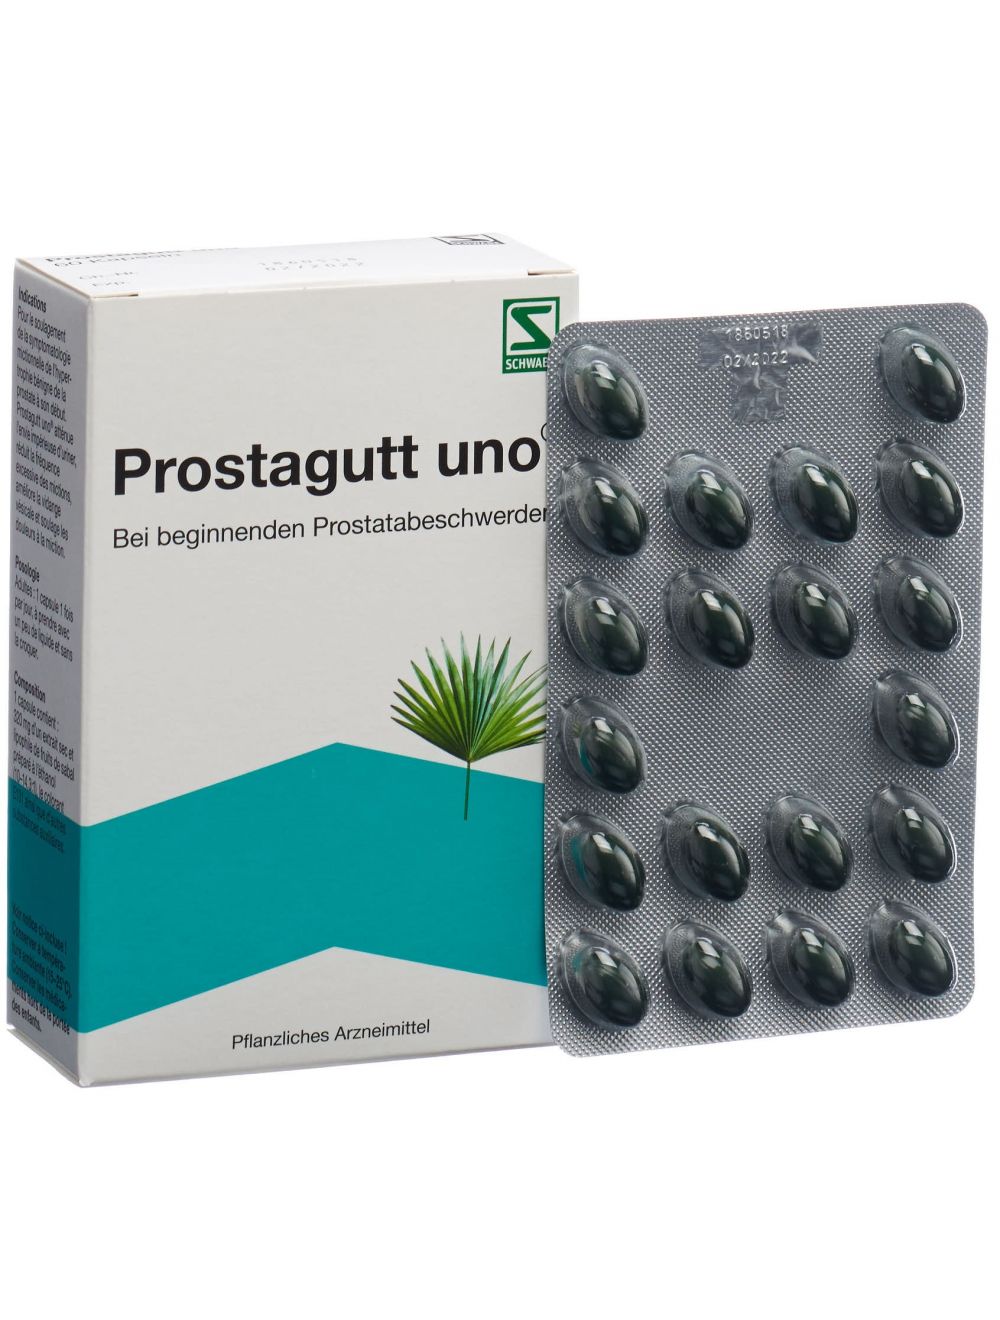 médicament prostate sans ordonnance en pharmacie